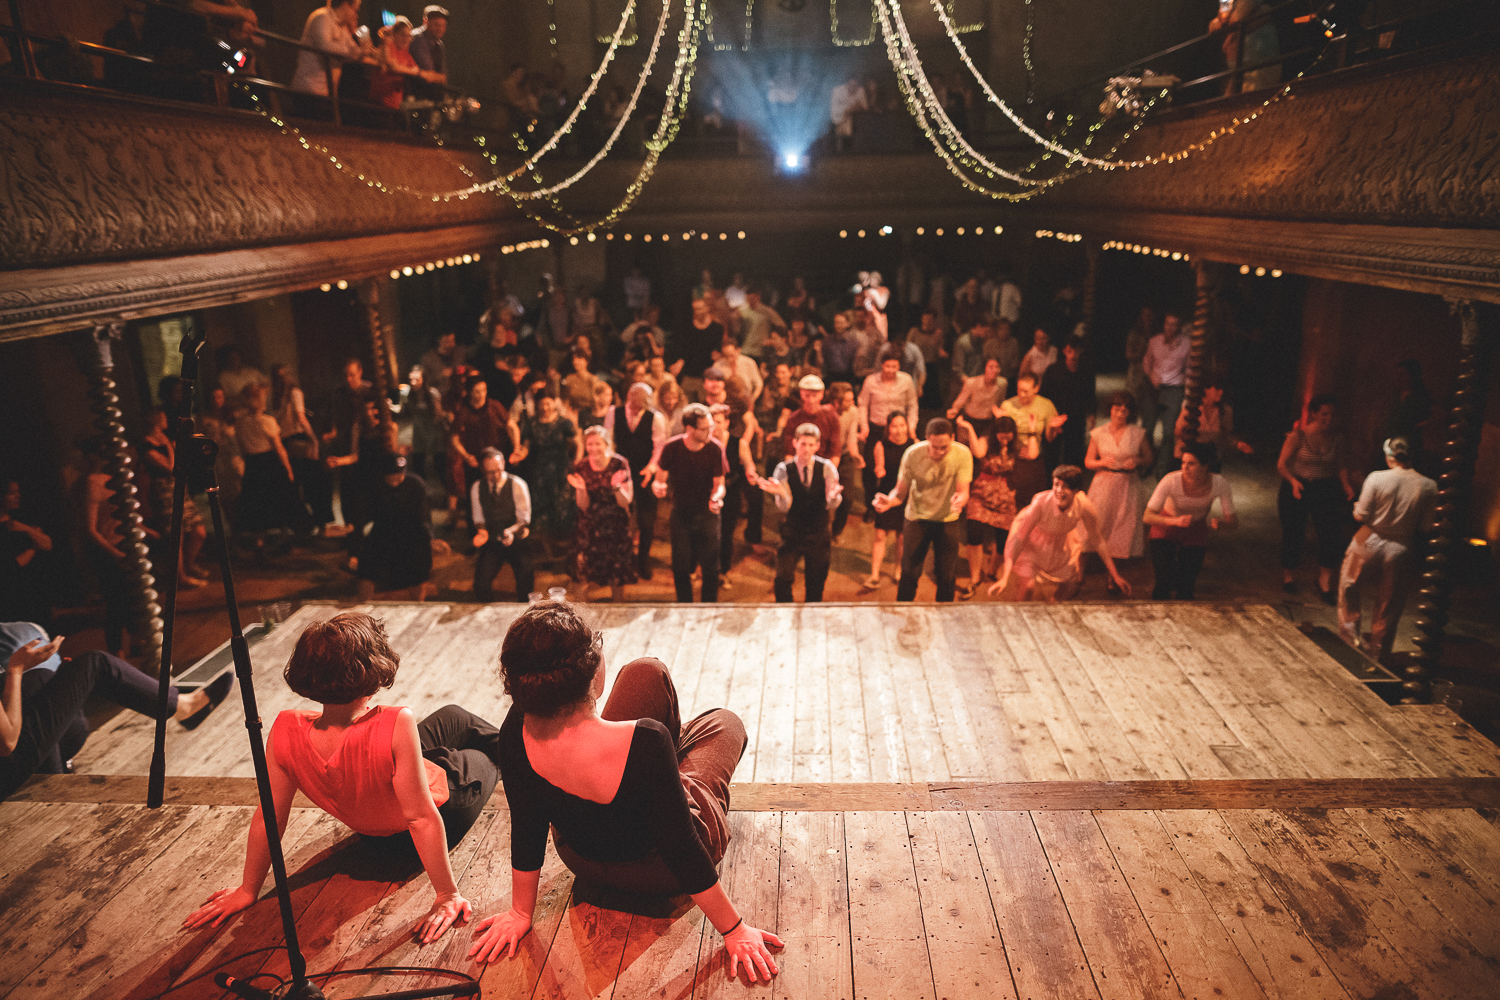  The London Swing Festival 2015 - Thursday Night. Photo Credit: For Dancers Only (http://d.pr/1fEEY) - http://www.ebobrie.com/london-swing-festival-2015/ 